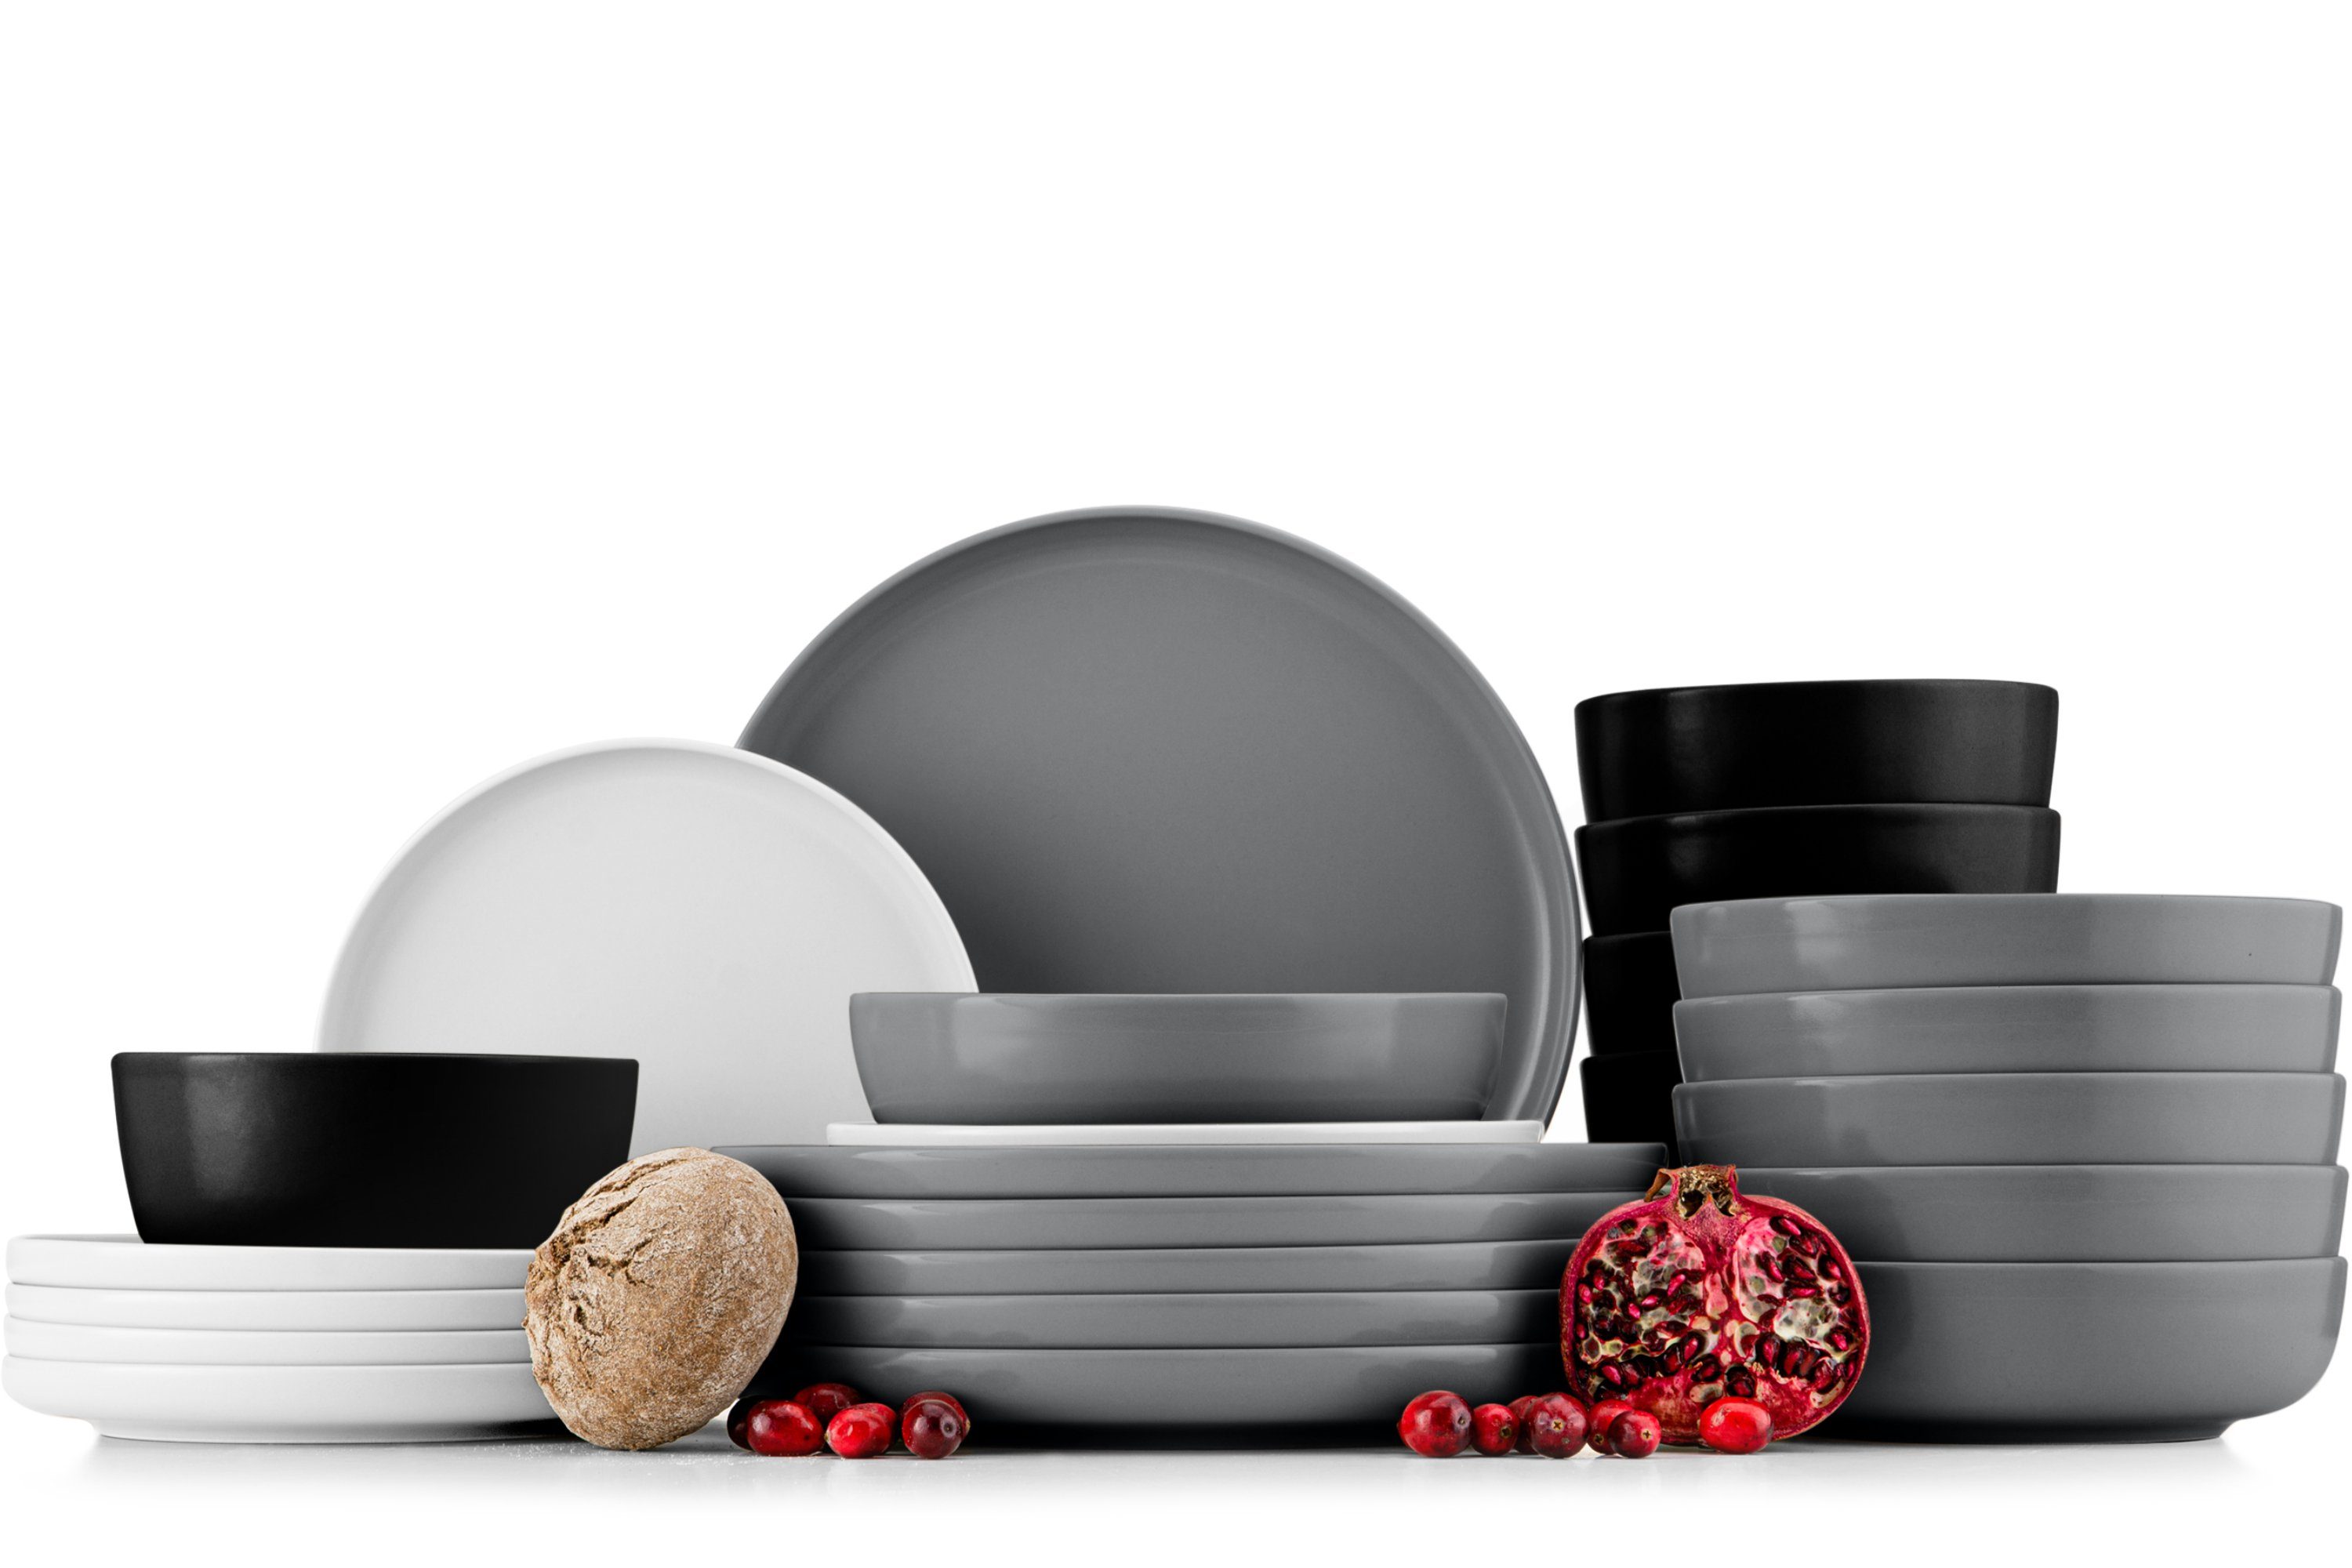 Konsimo Kombiservice VICTO Geschirrset hergestellt in der EU (24-tlg), 6 Personen, Steingut, spülmaschinengeeignet, mikrowellengeeignet, mehrfarbig, matt matt grau/weiß/schwarz/grau